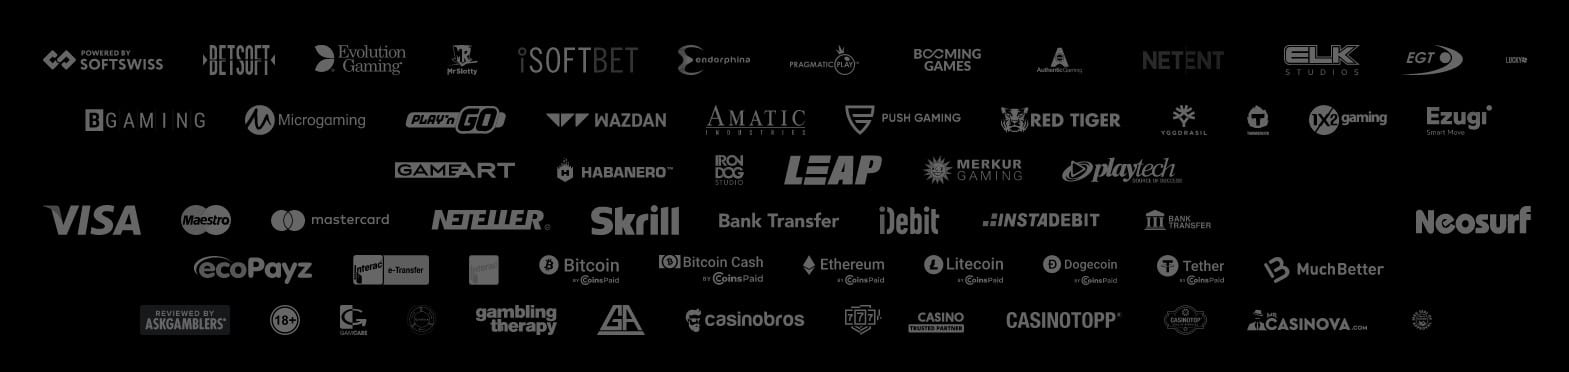 BitKingz Casino - Games & Software